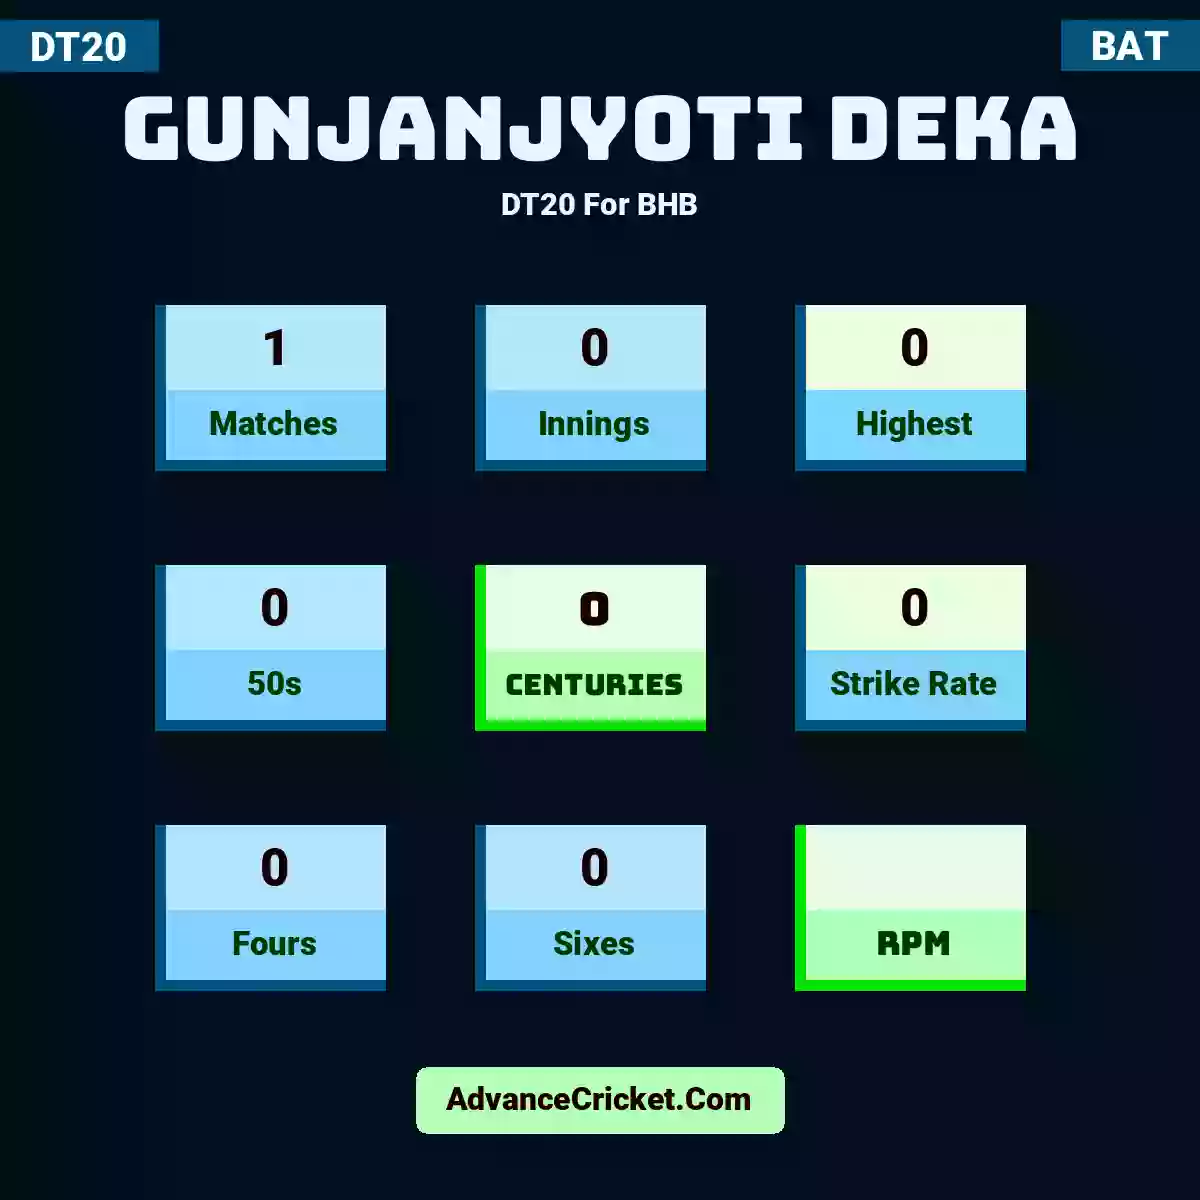 Gunjanjyoti Deka DT20  For BHB, Gunjanjyoti Deka played 1 matches, scored 0 runs as highest, 0 half-centuries, and 0 centuries, with a strike rate of 0. G.Deka hit 0 fours and 0 sixes.